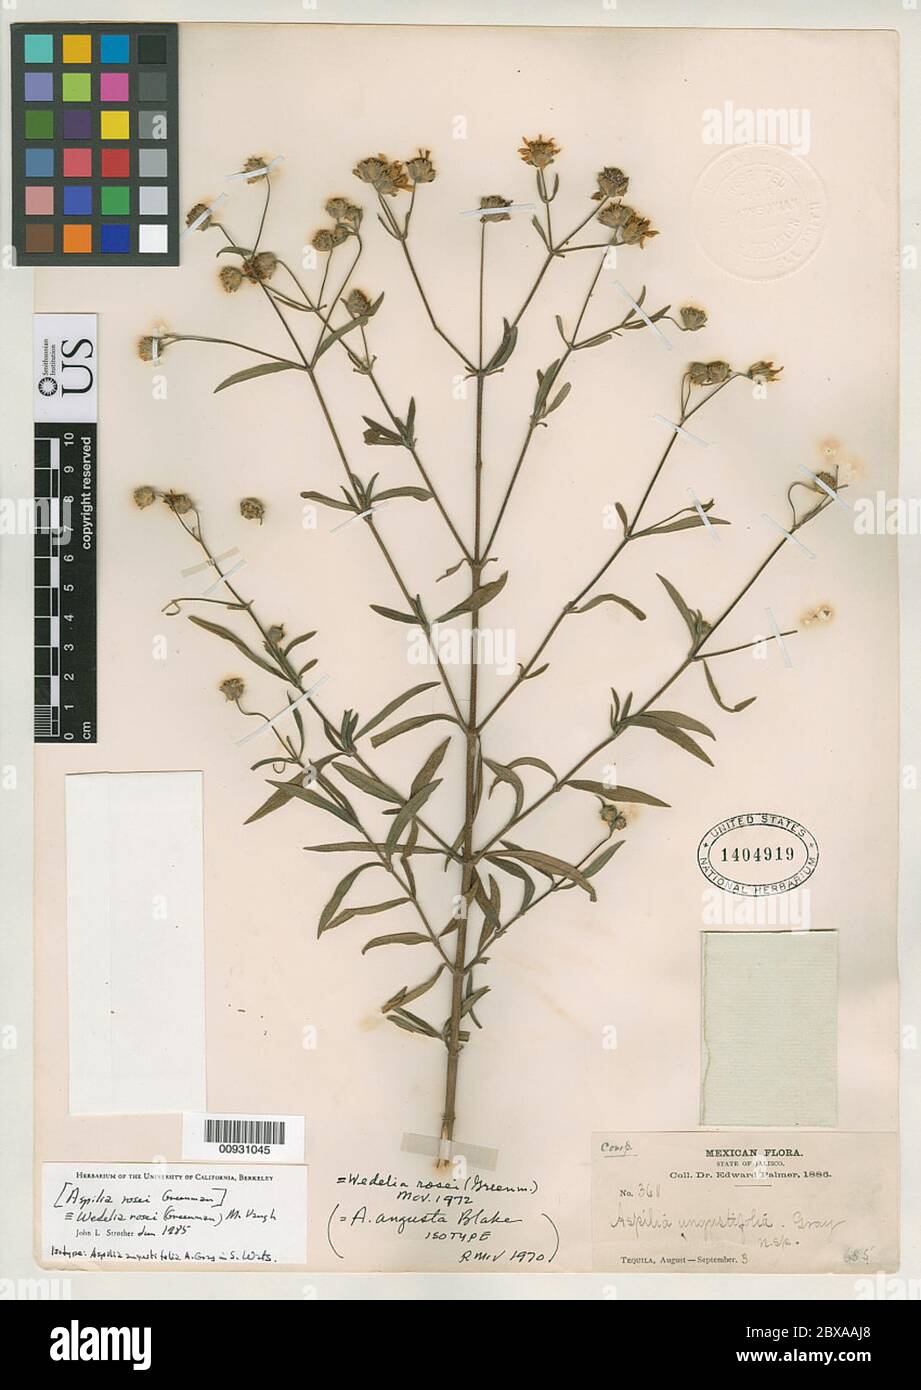 Aspilia angustifolia A Gray nom illeg Aspilia angustifolia A Gray nom illeg. Stock Photo